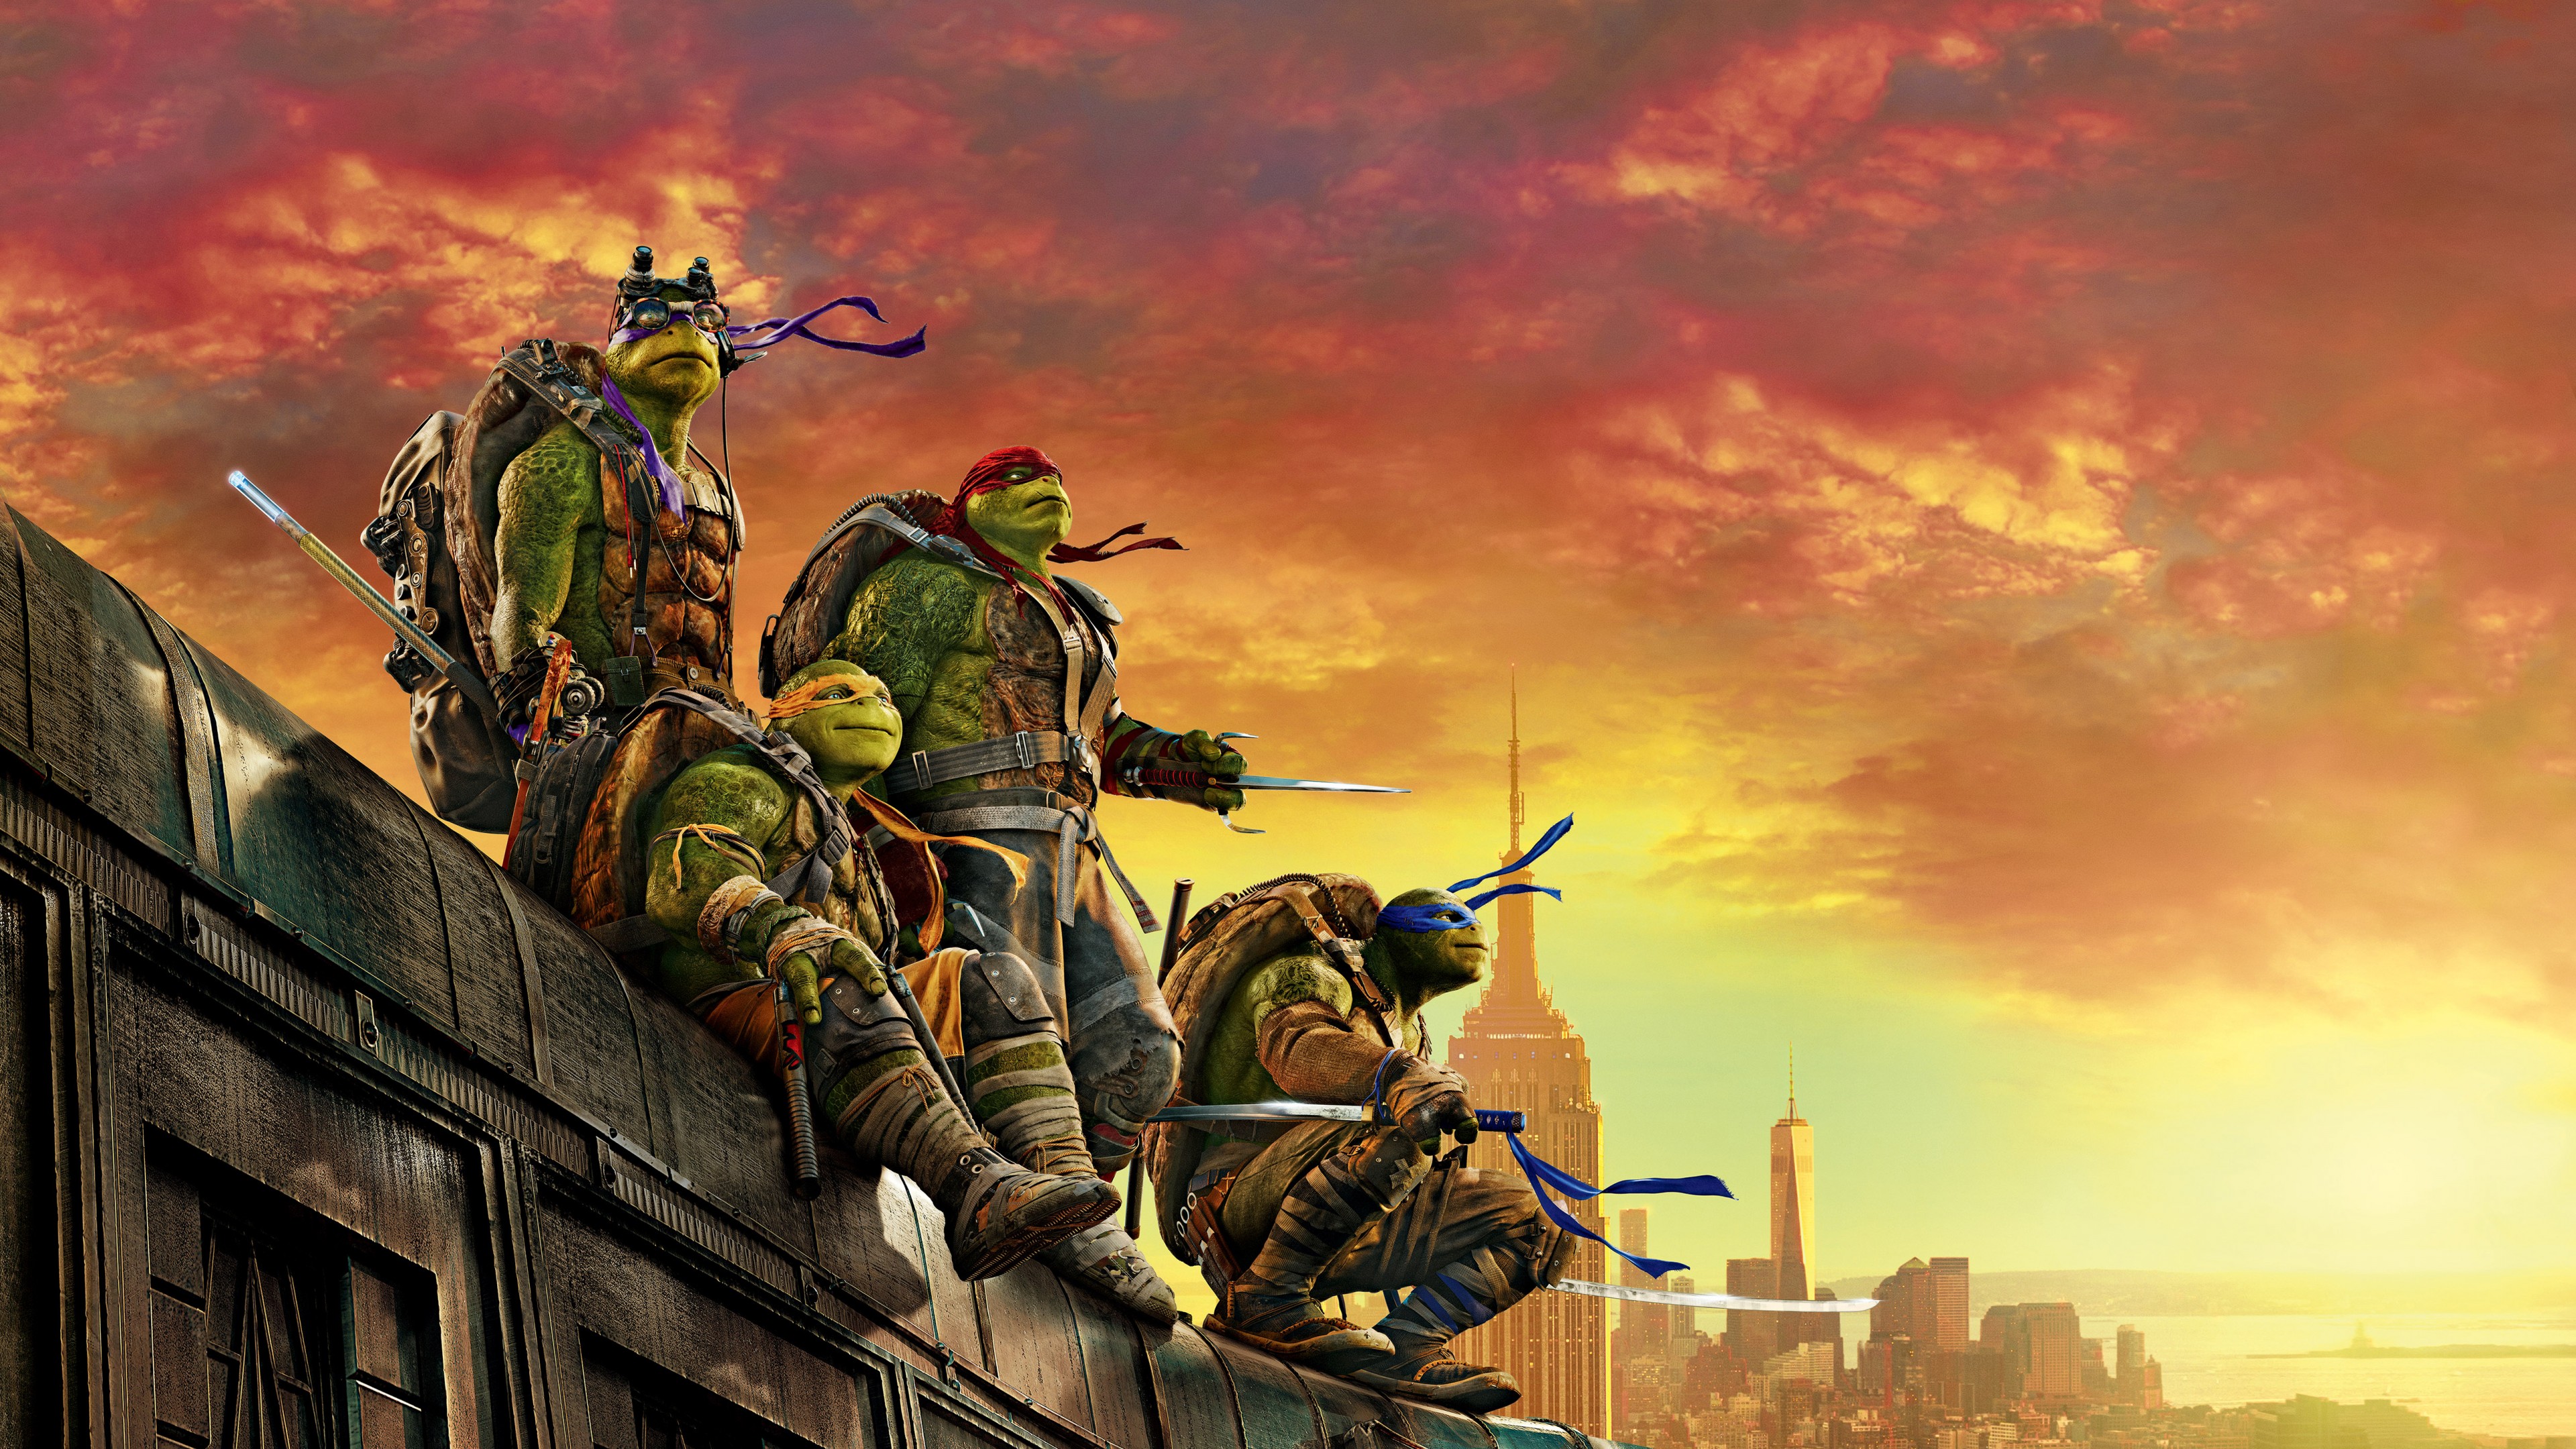 ninja turtles wallpaper,action adventure game,strategy video game,pc game,cg artwork,adventure game